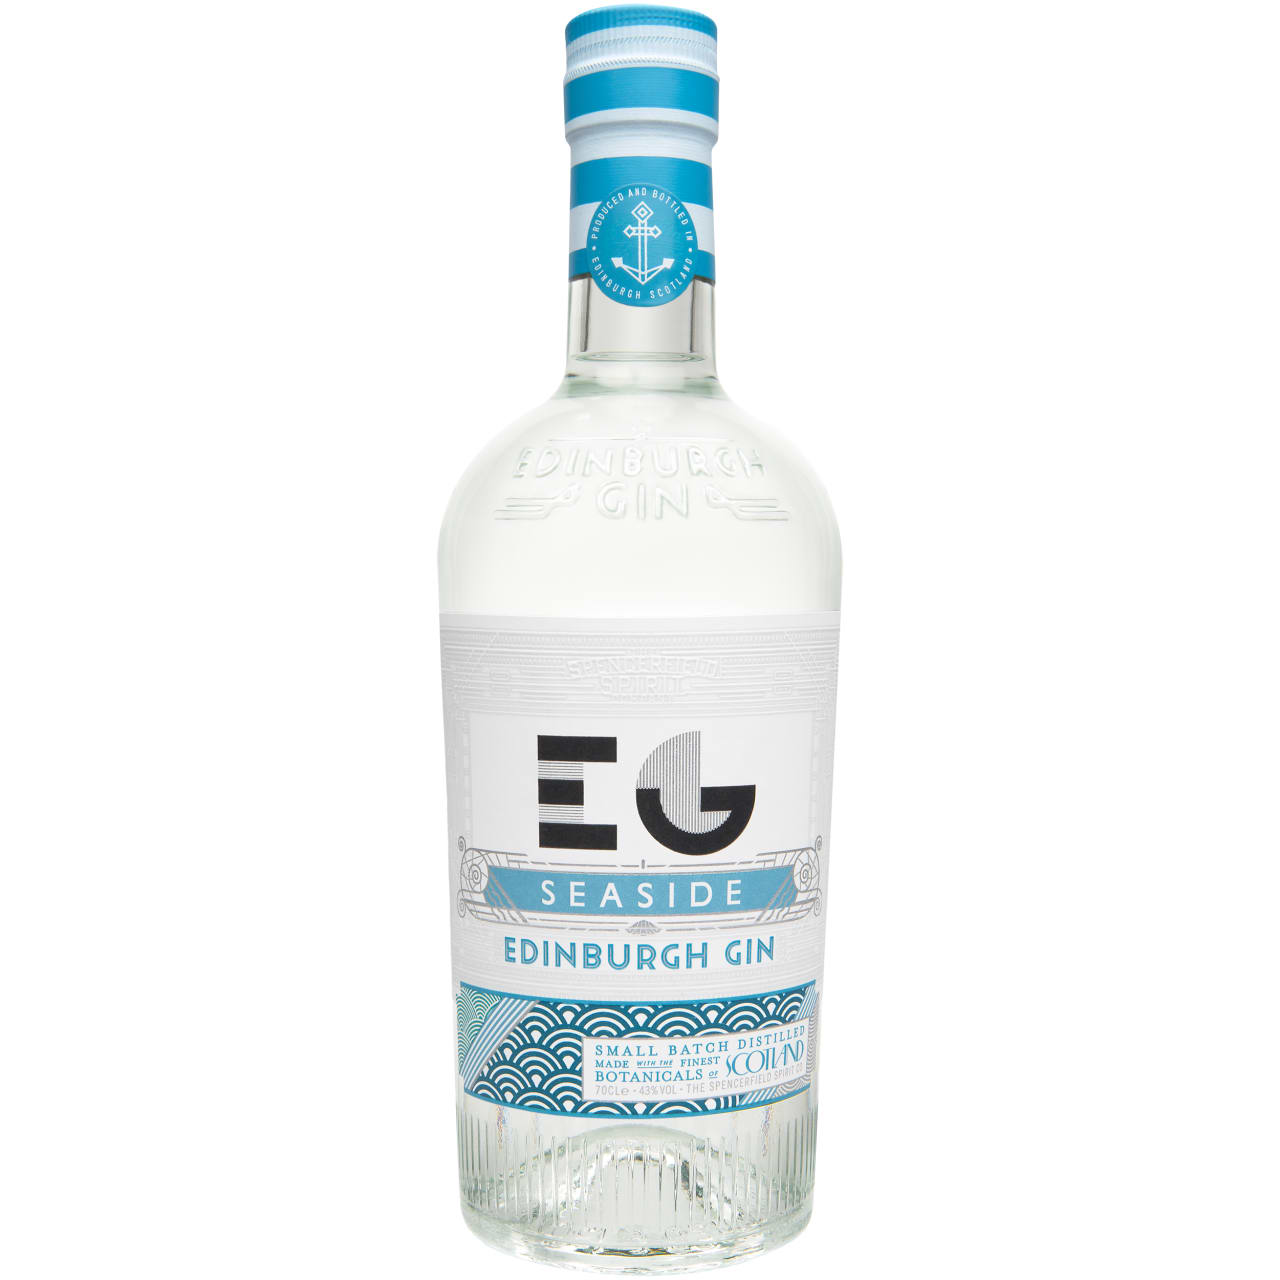 Product Image - Edinburgh Gin Seaside